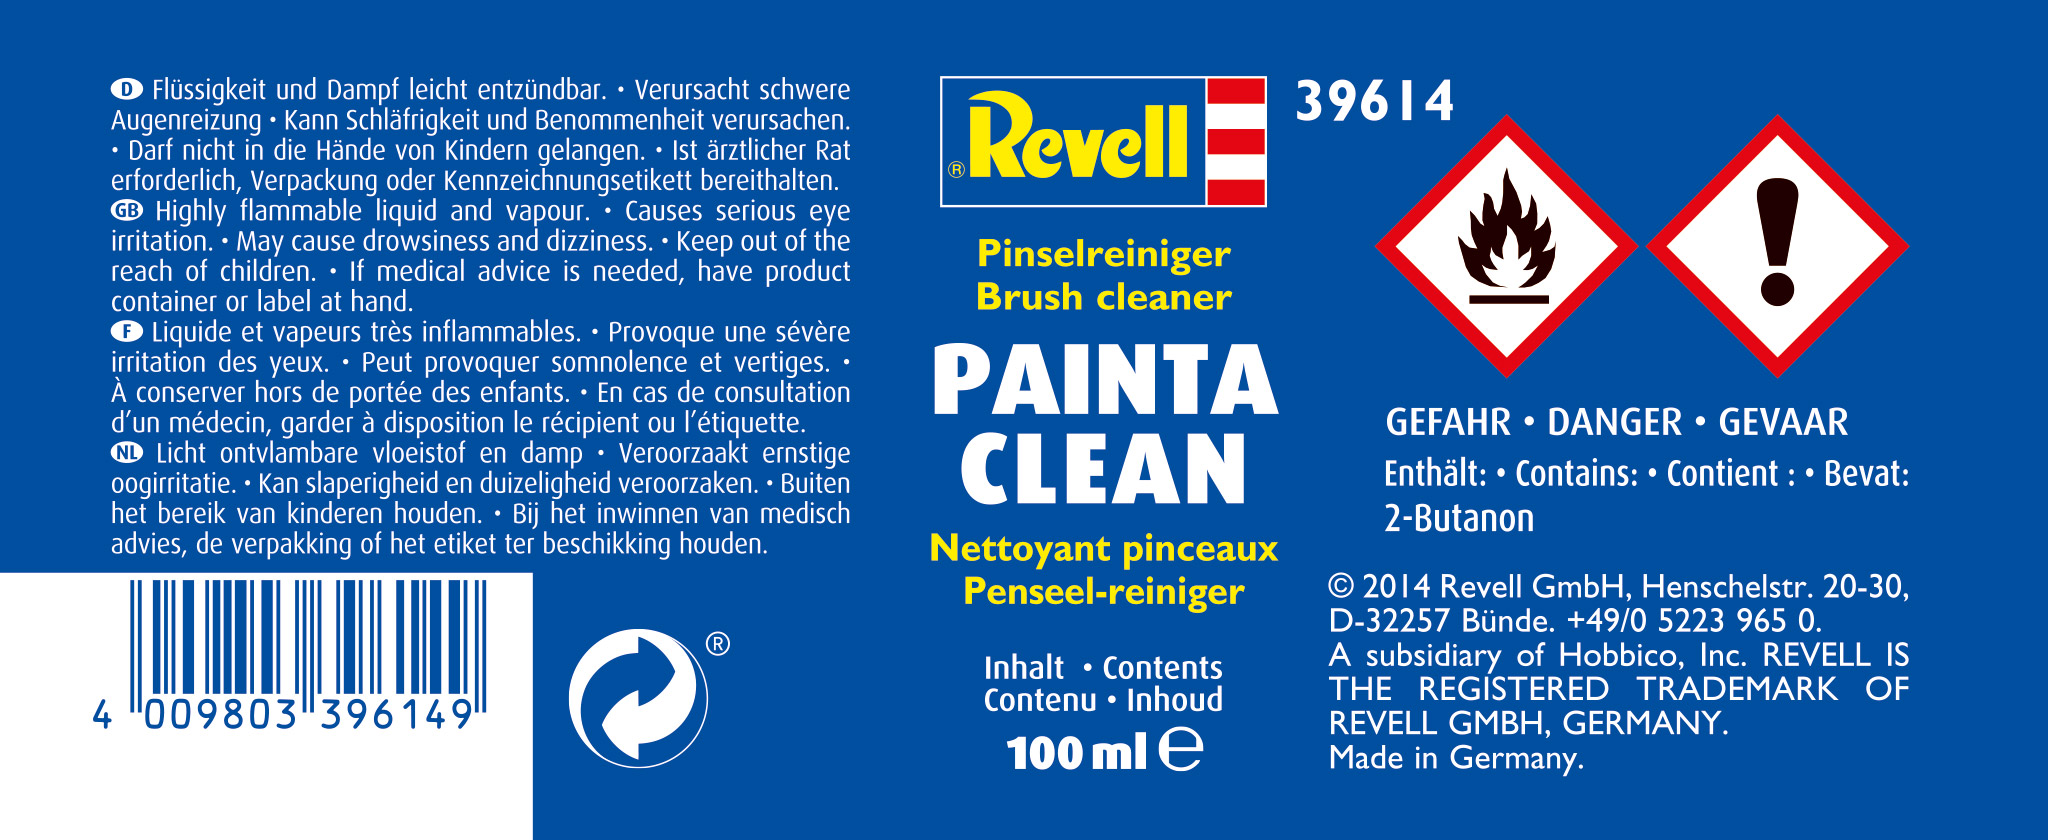 revell-39614-2-painta-clean-Pinselreiniger